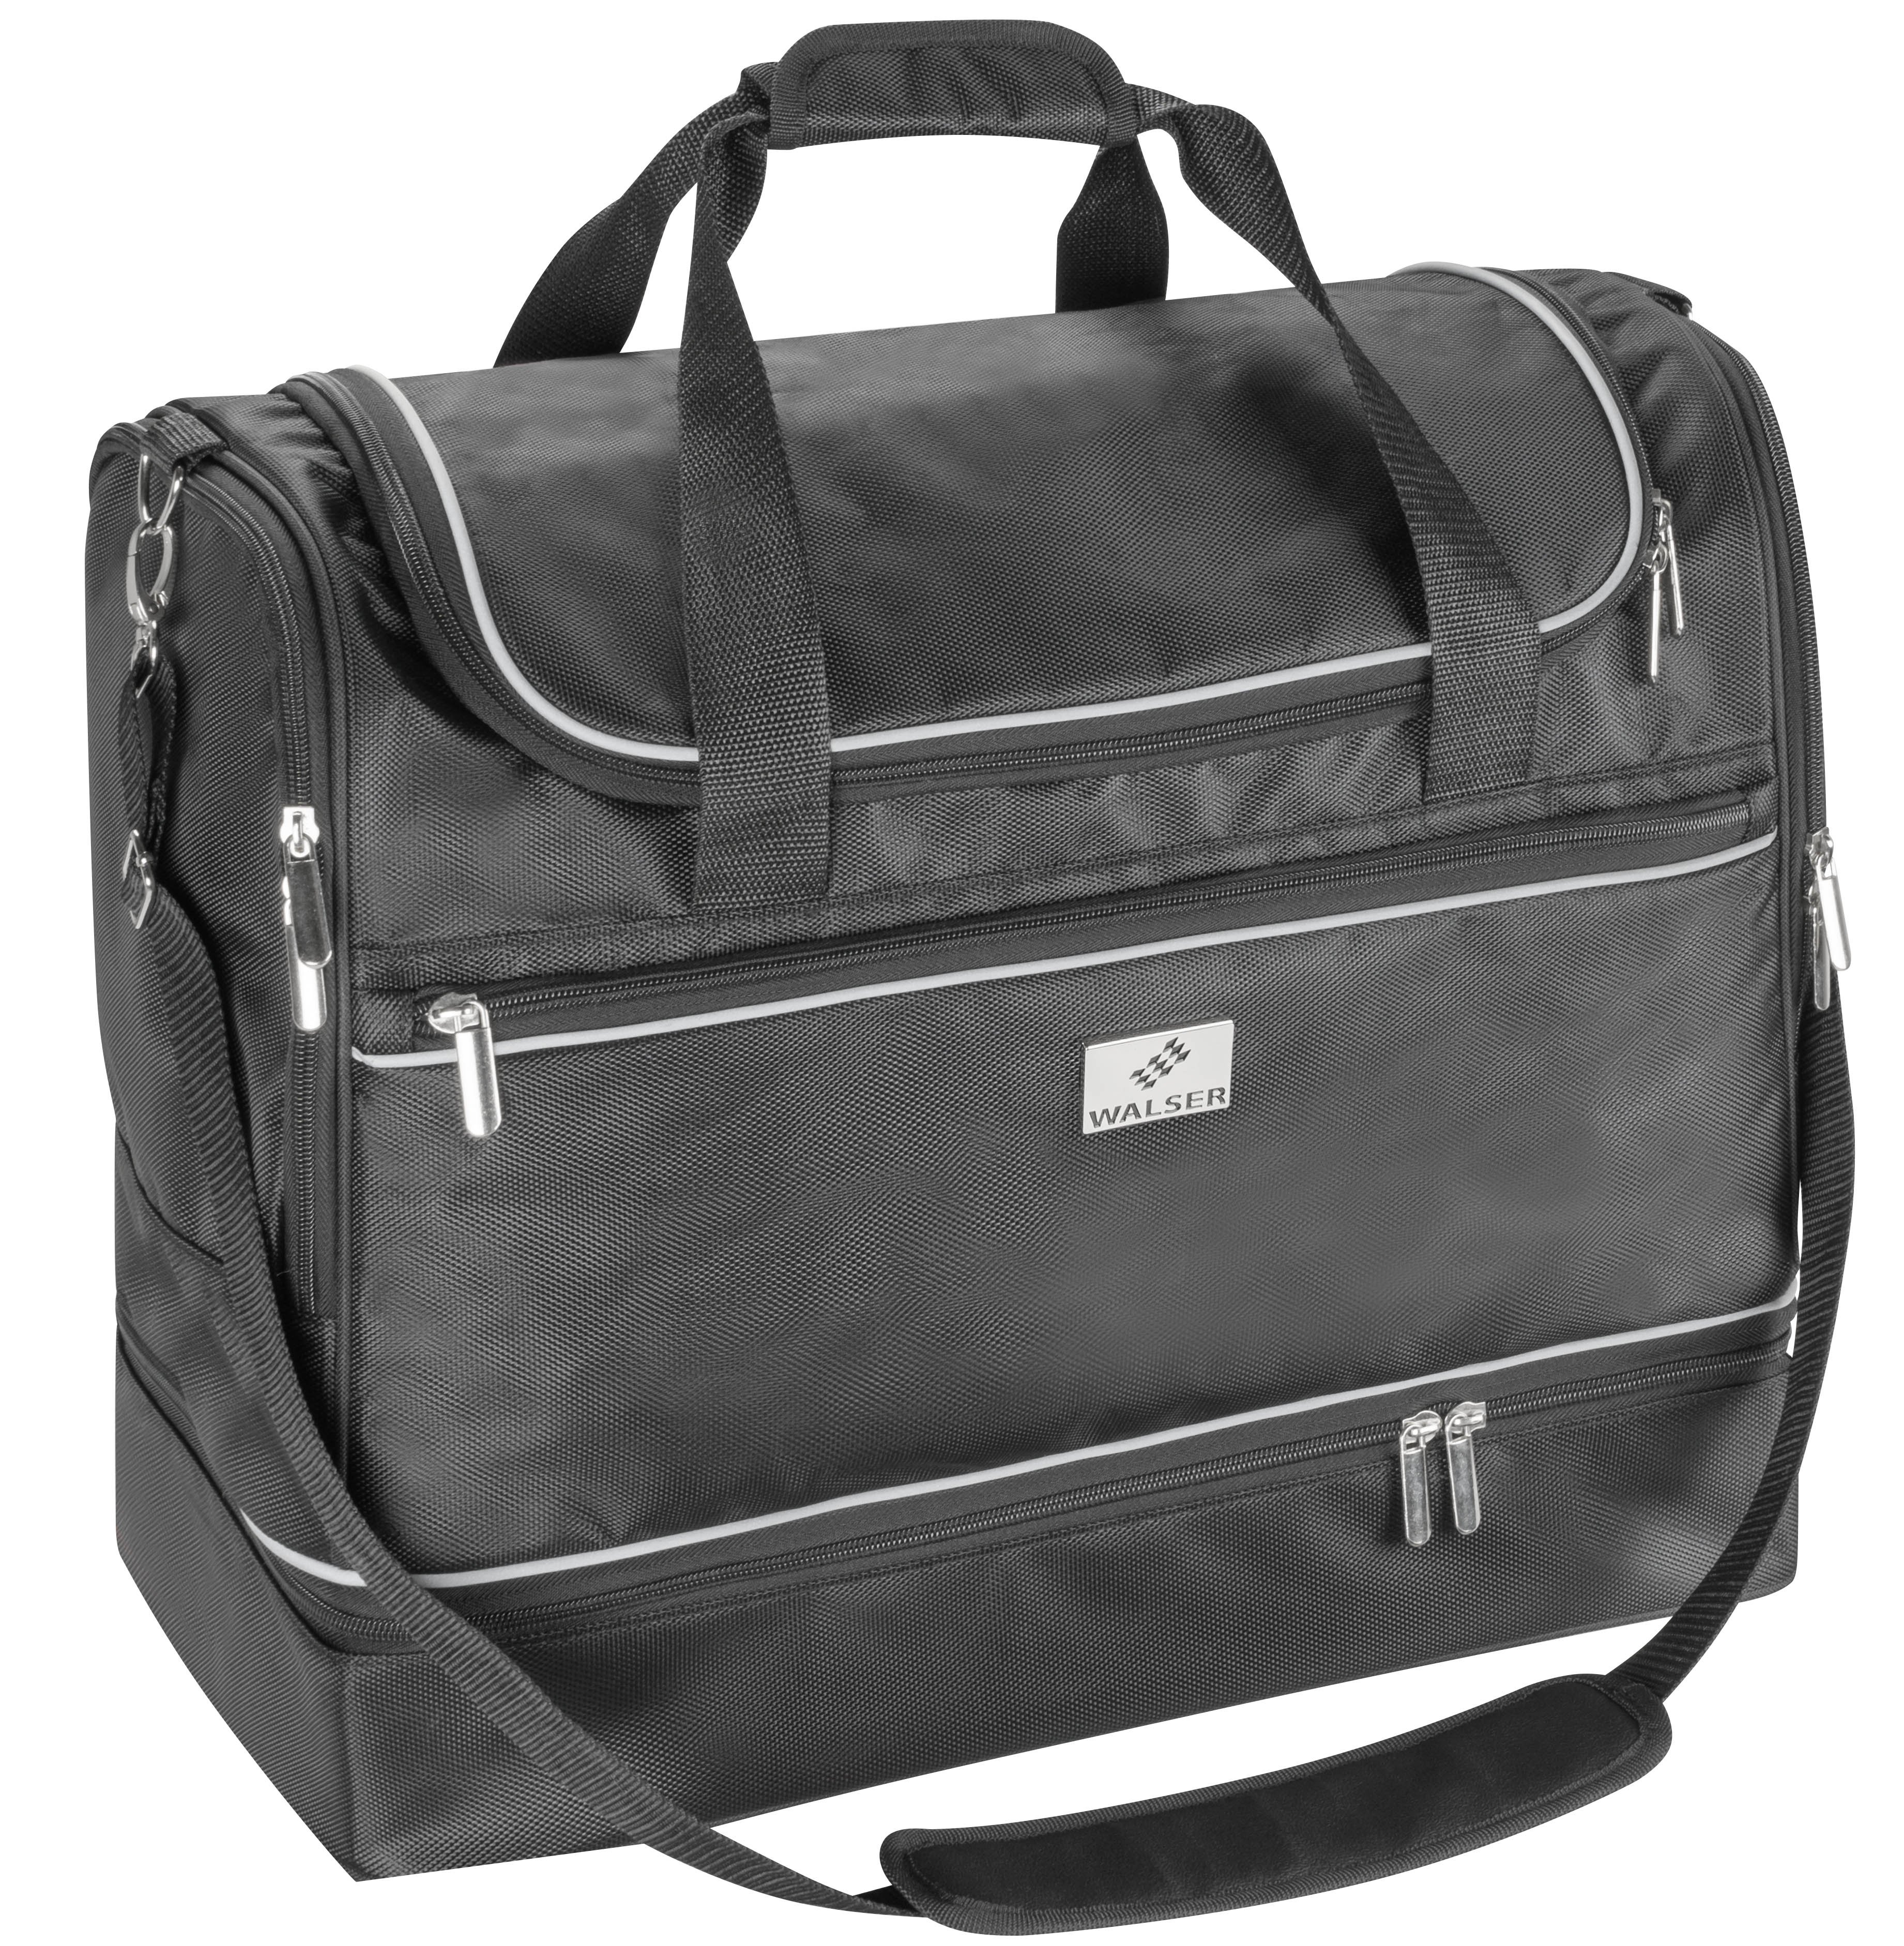 Carbags sports bag 45L - 35x30x40cm